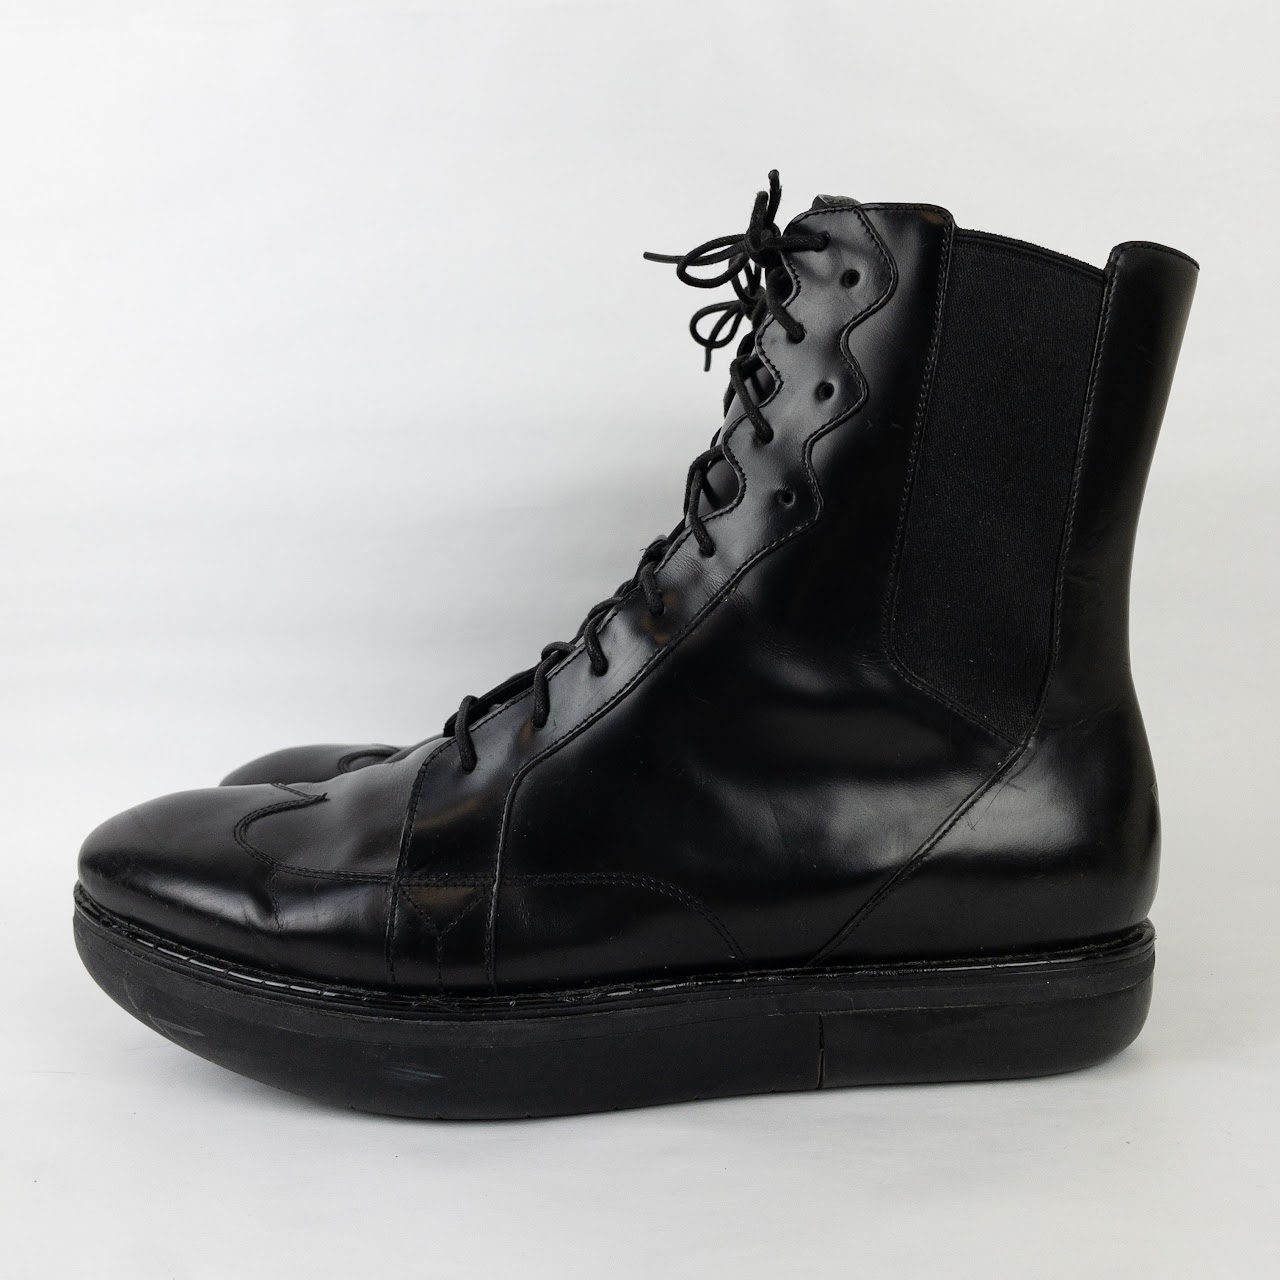 Yohji Yamamoto Y-3 Leather Lace-Up Boots